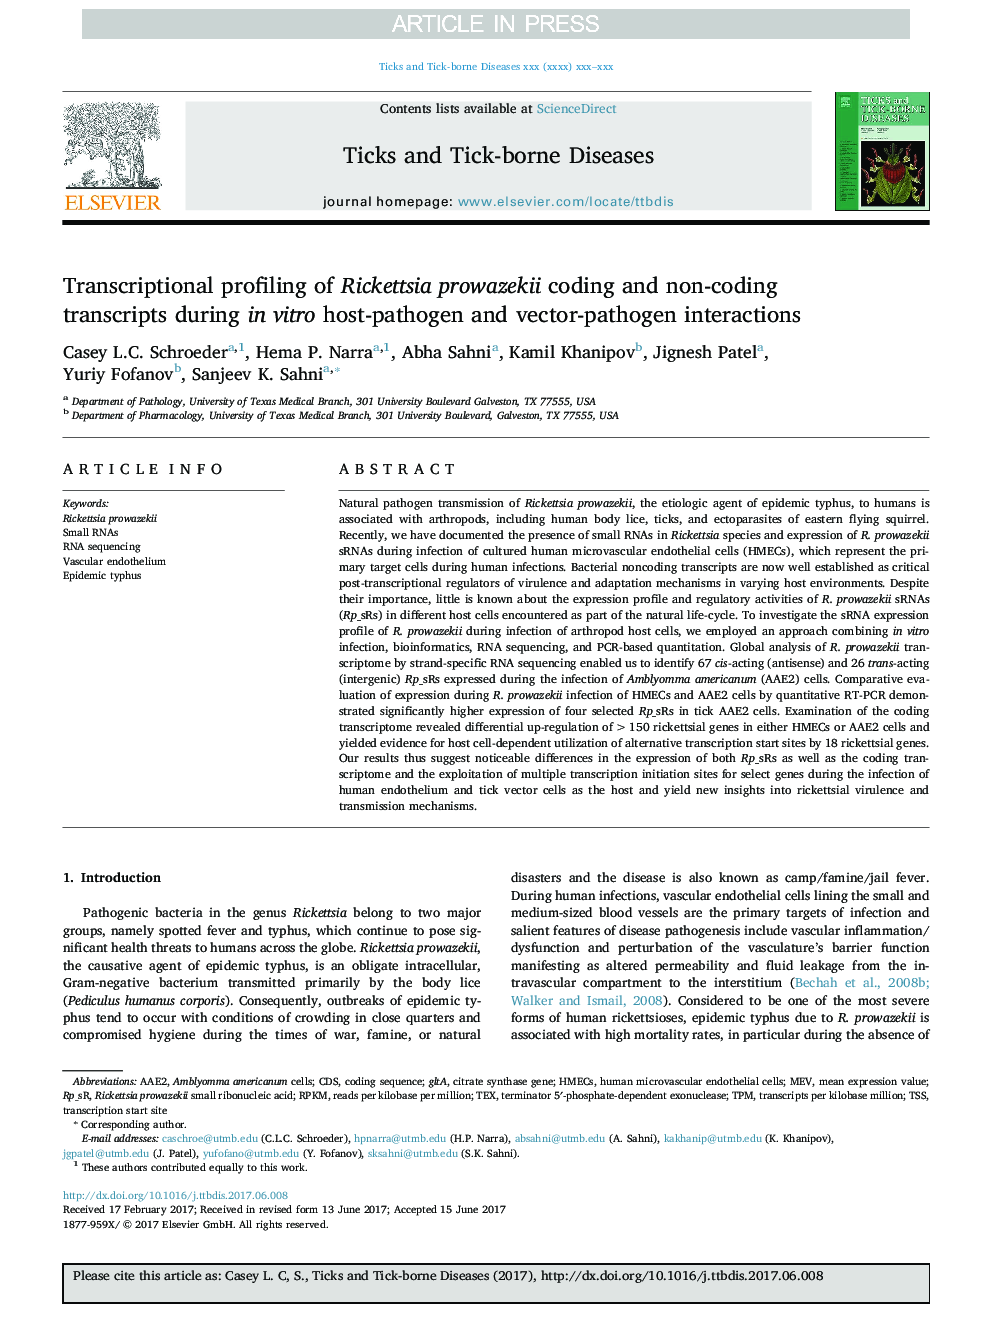 Transcriptional profiling of Rickettsia prowazekii coding and non-coding transcripts during in vitro host-pathogen and vector-pathogen interactions